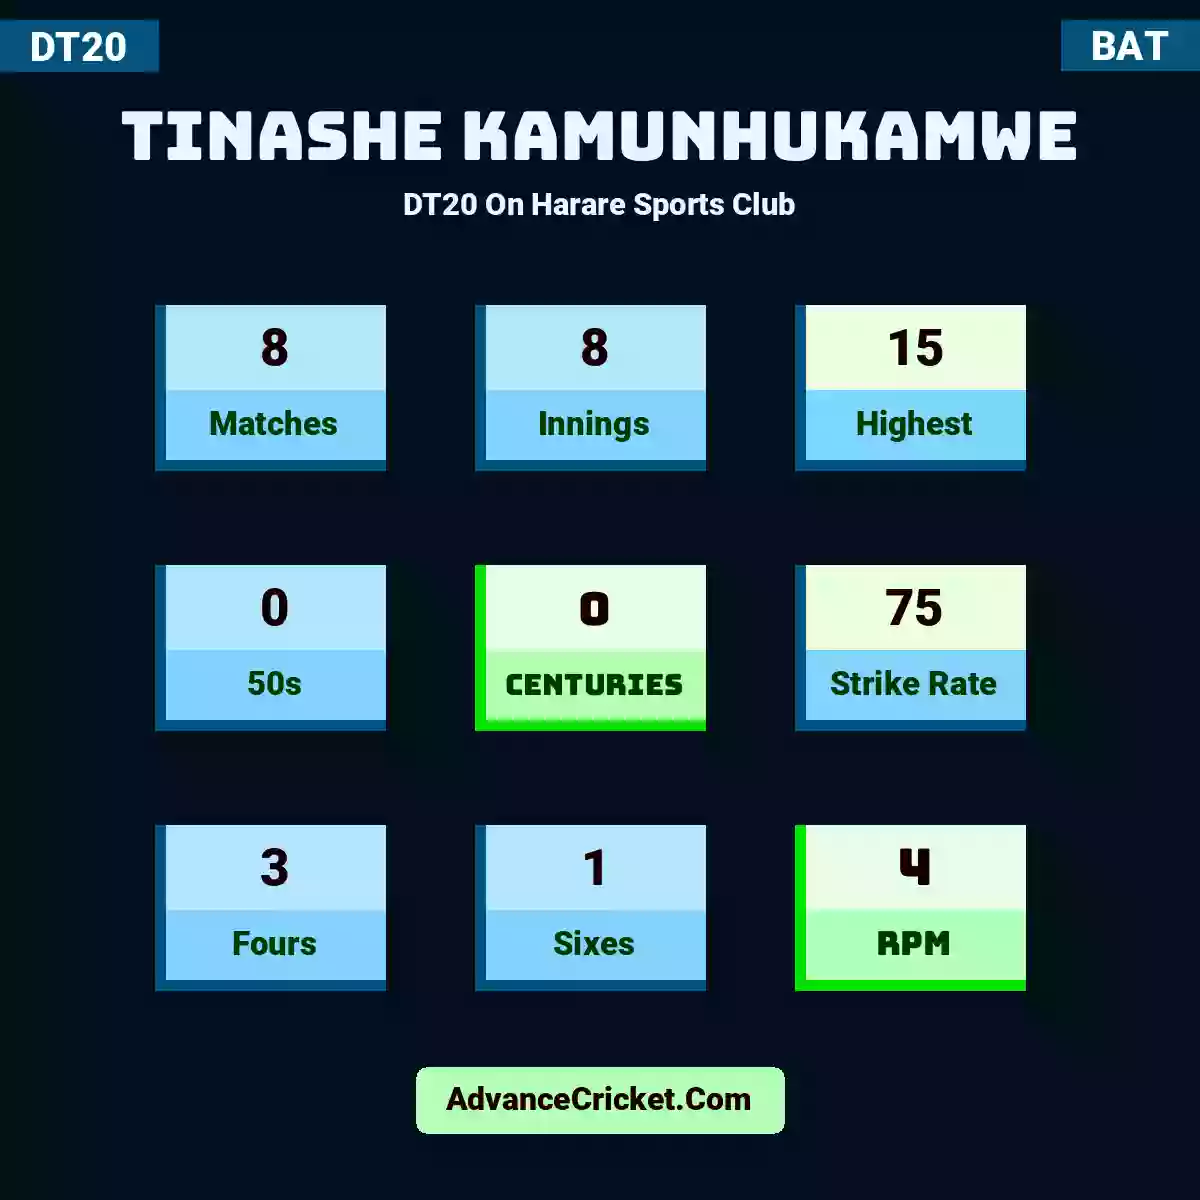 Tinashe Kamunhukamwe DT20  On Harare Sports Club, Tinashe Kamunhukamwe played 8 matches, scored 15 runs as highest, 0 half-centuries, and 0 centuries, with a strike rate of 75. T.Kamunhukamwe hit 3 fours and 1 sixes, with an RPM of 4.